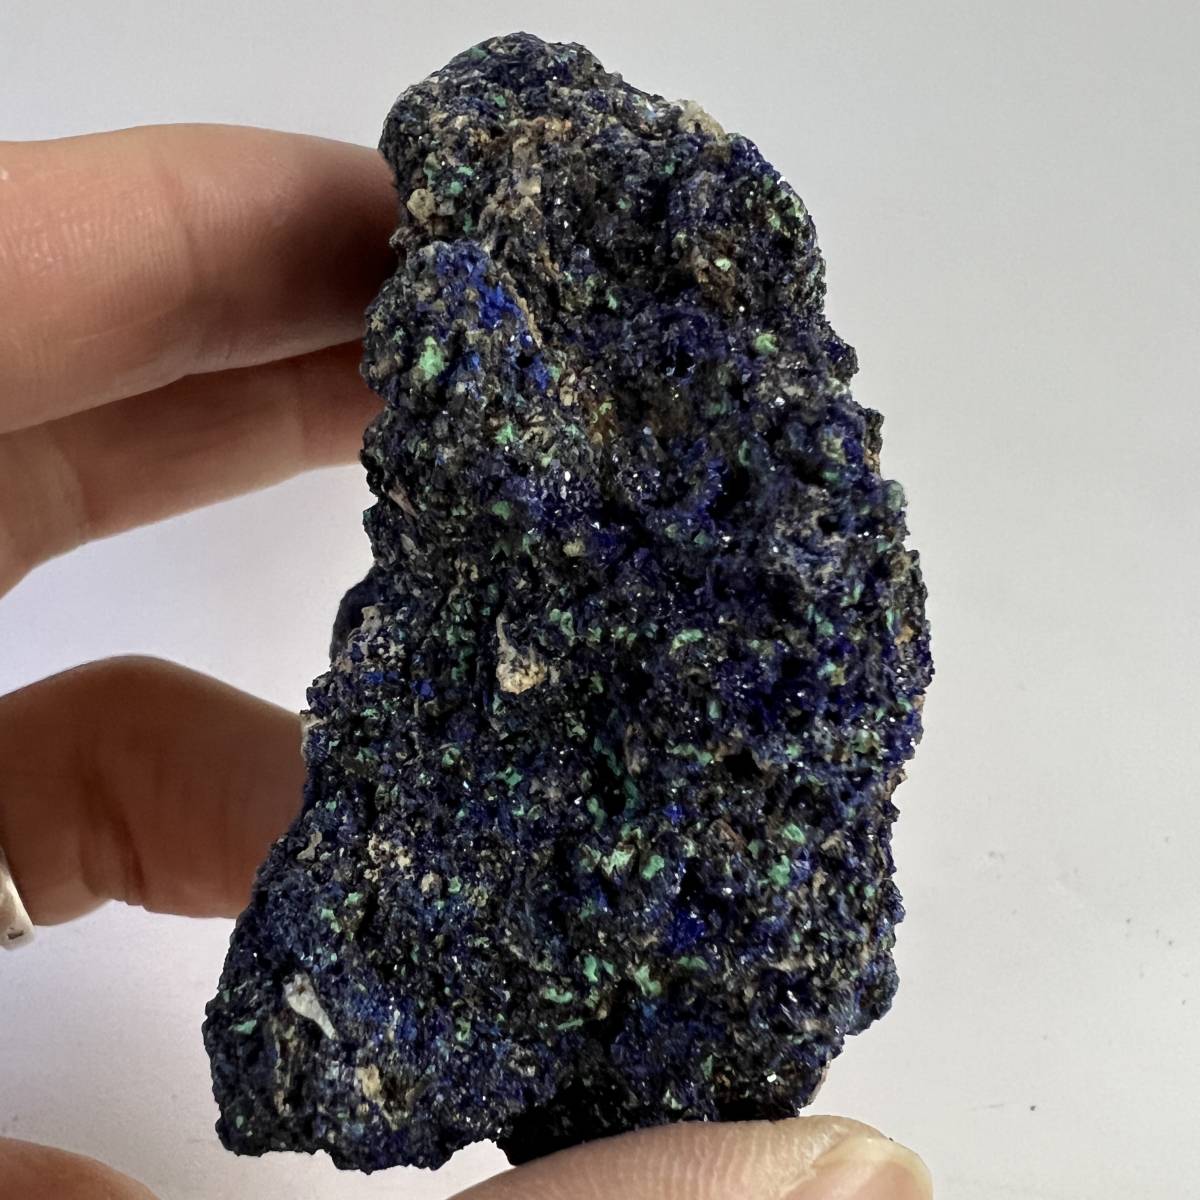 【E22025】マラカイトを伴うアジュライト アジュライト 藍銅鉱 岩絵の具 マラカイト Azurite 天然石 原石 鉱物 パワ